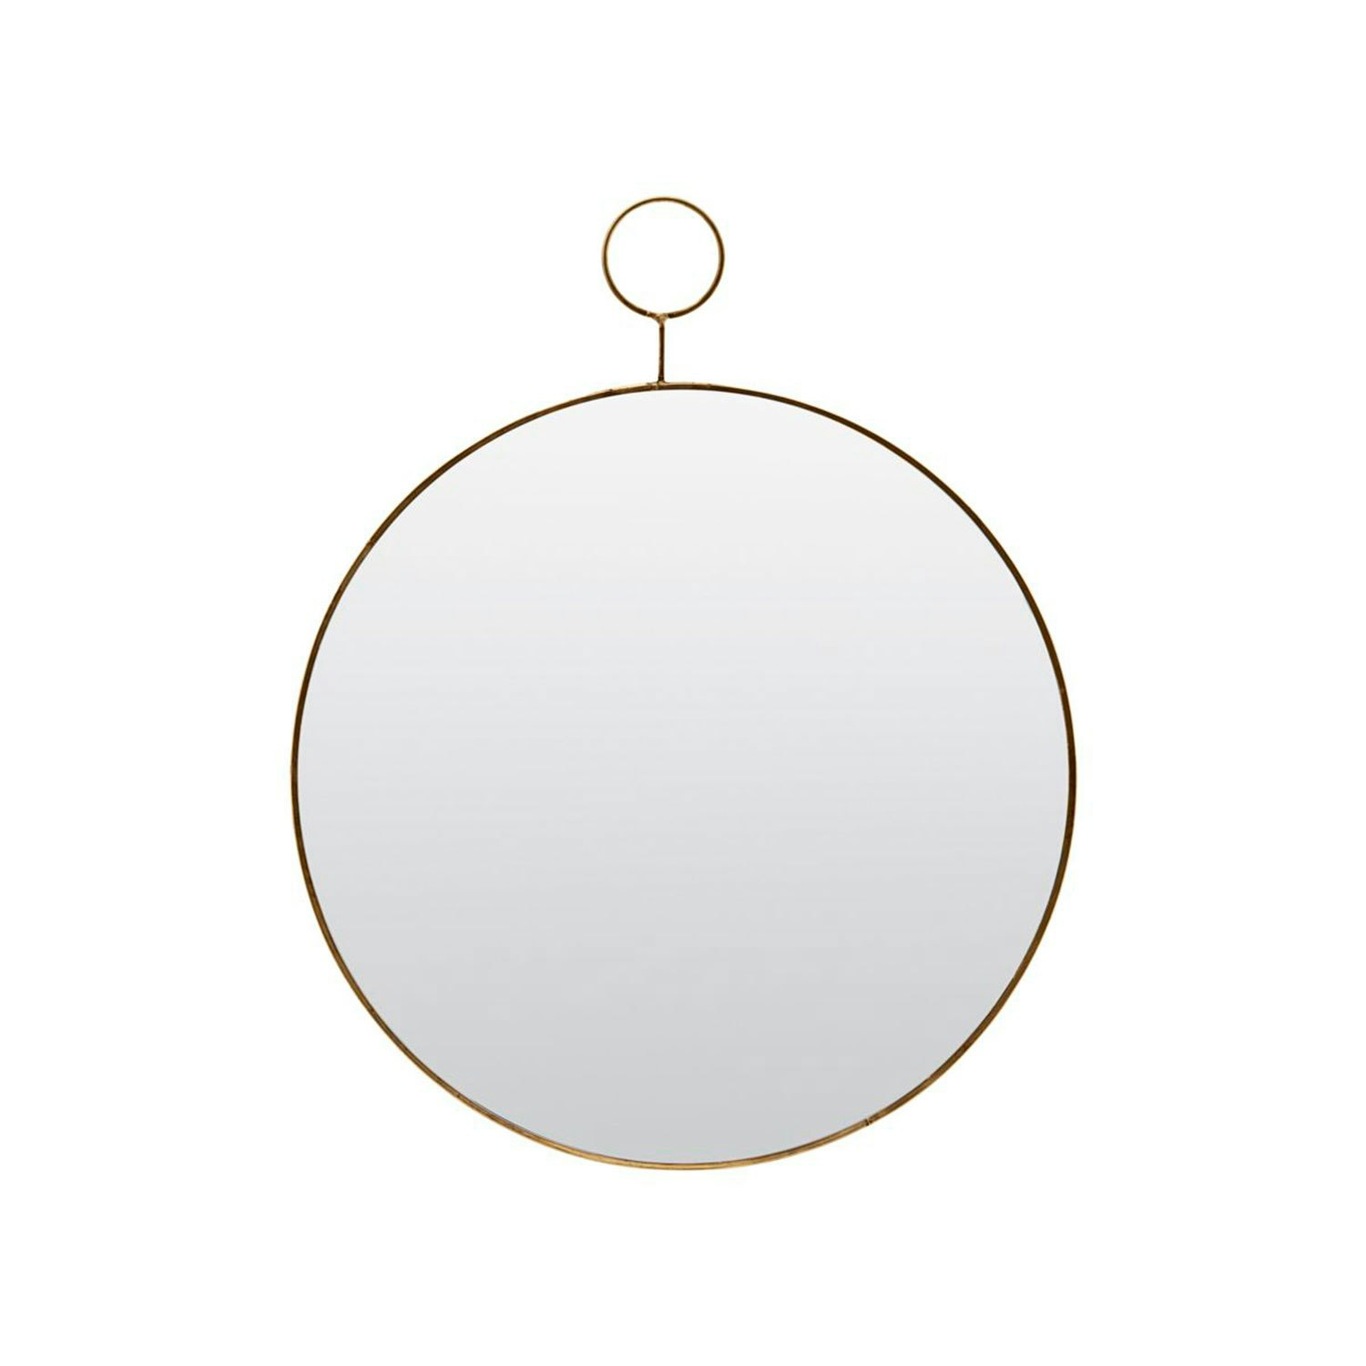 The Loop Mirror Ø38cm, Brass